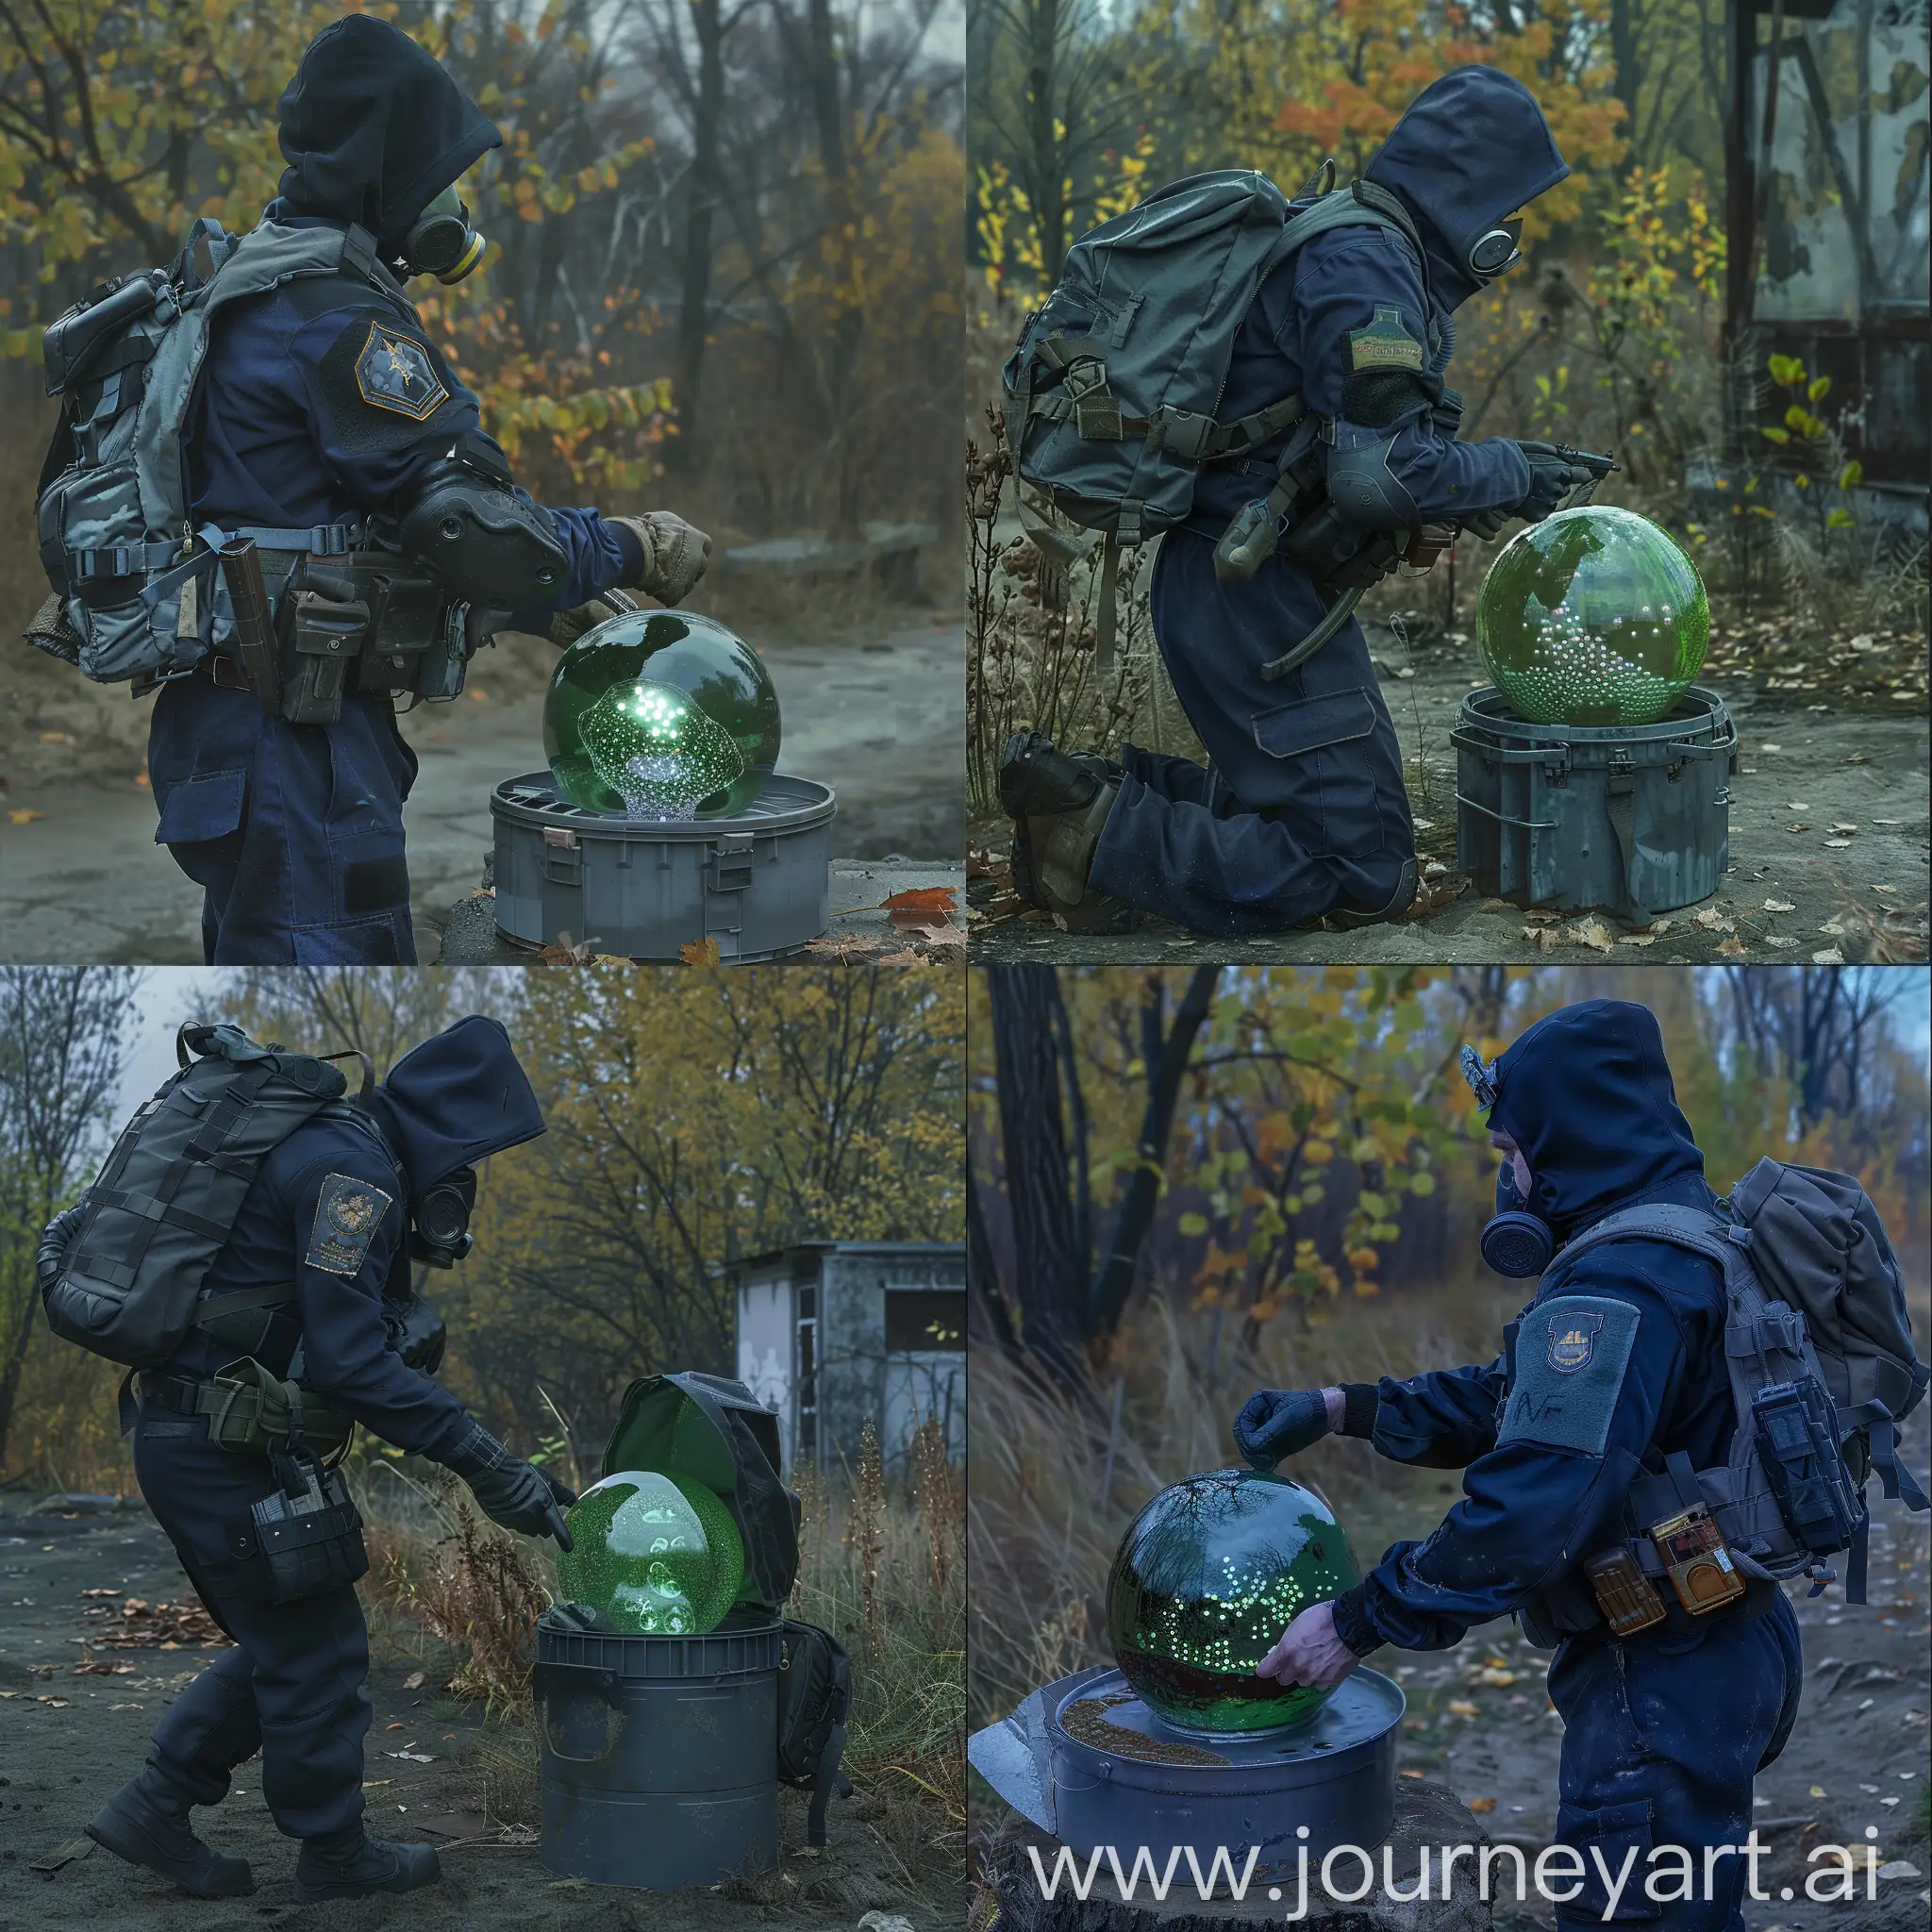 Mercenary-Collecting-Glowing-Artifact-in-Gloomy-Chernobyl